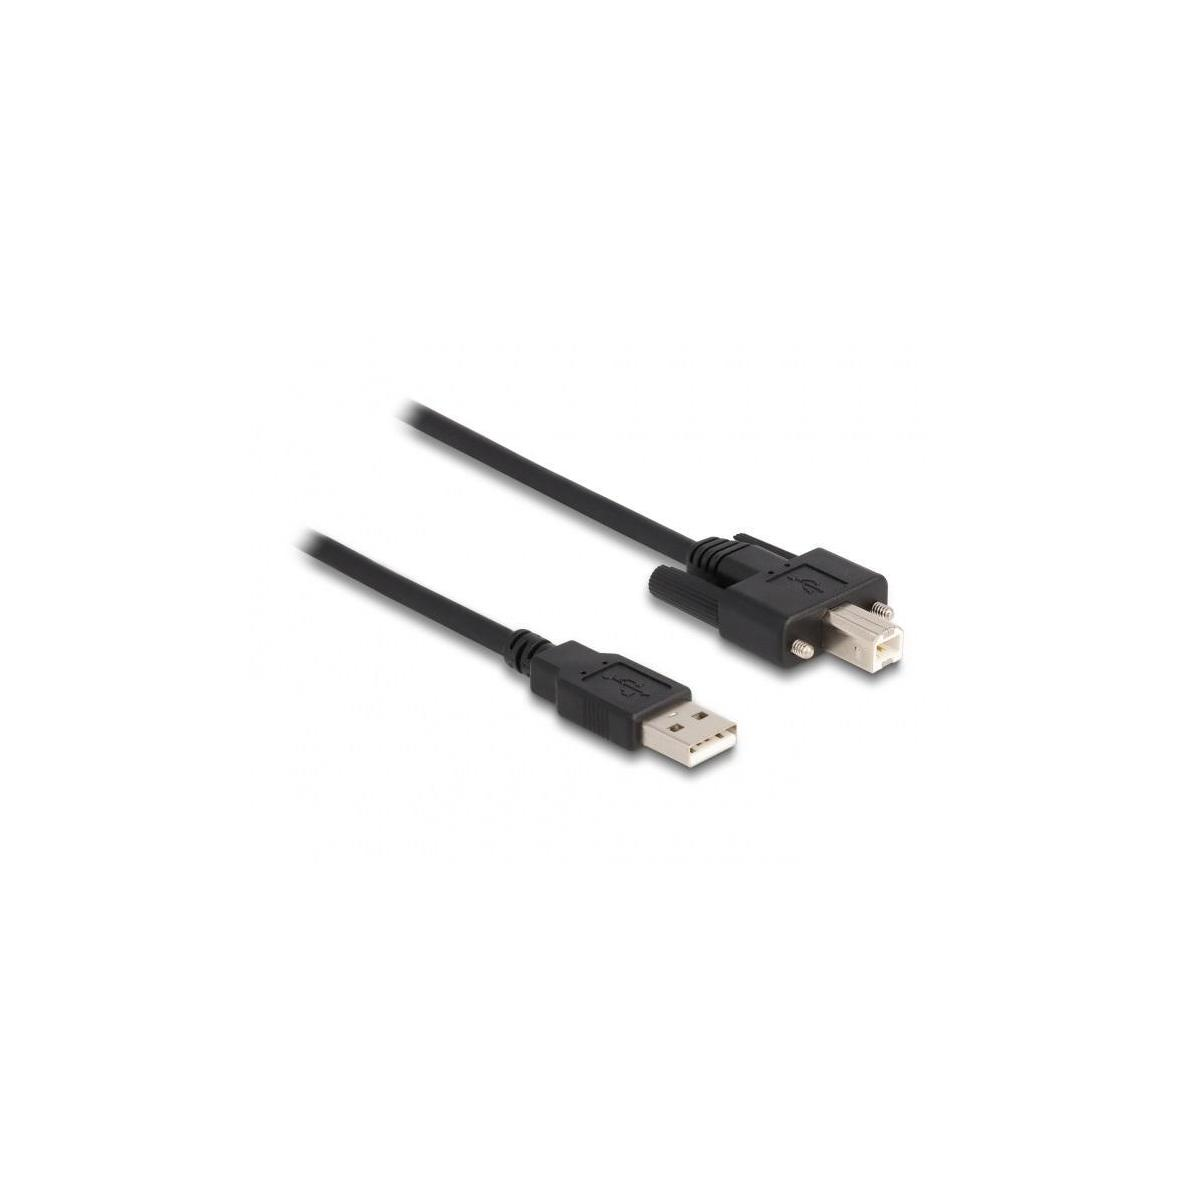 DELOCK 87197 USB Kabel, Schwarz